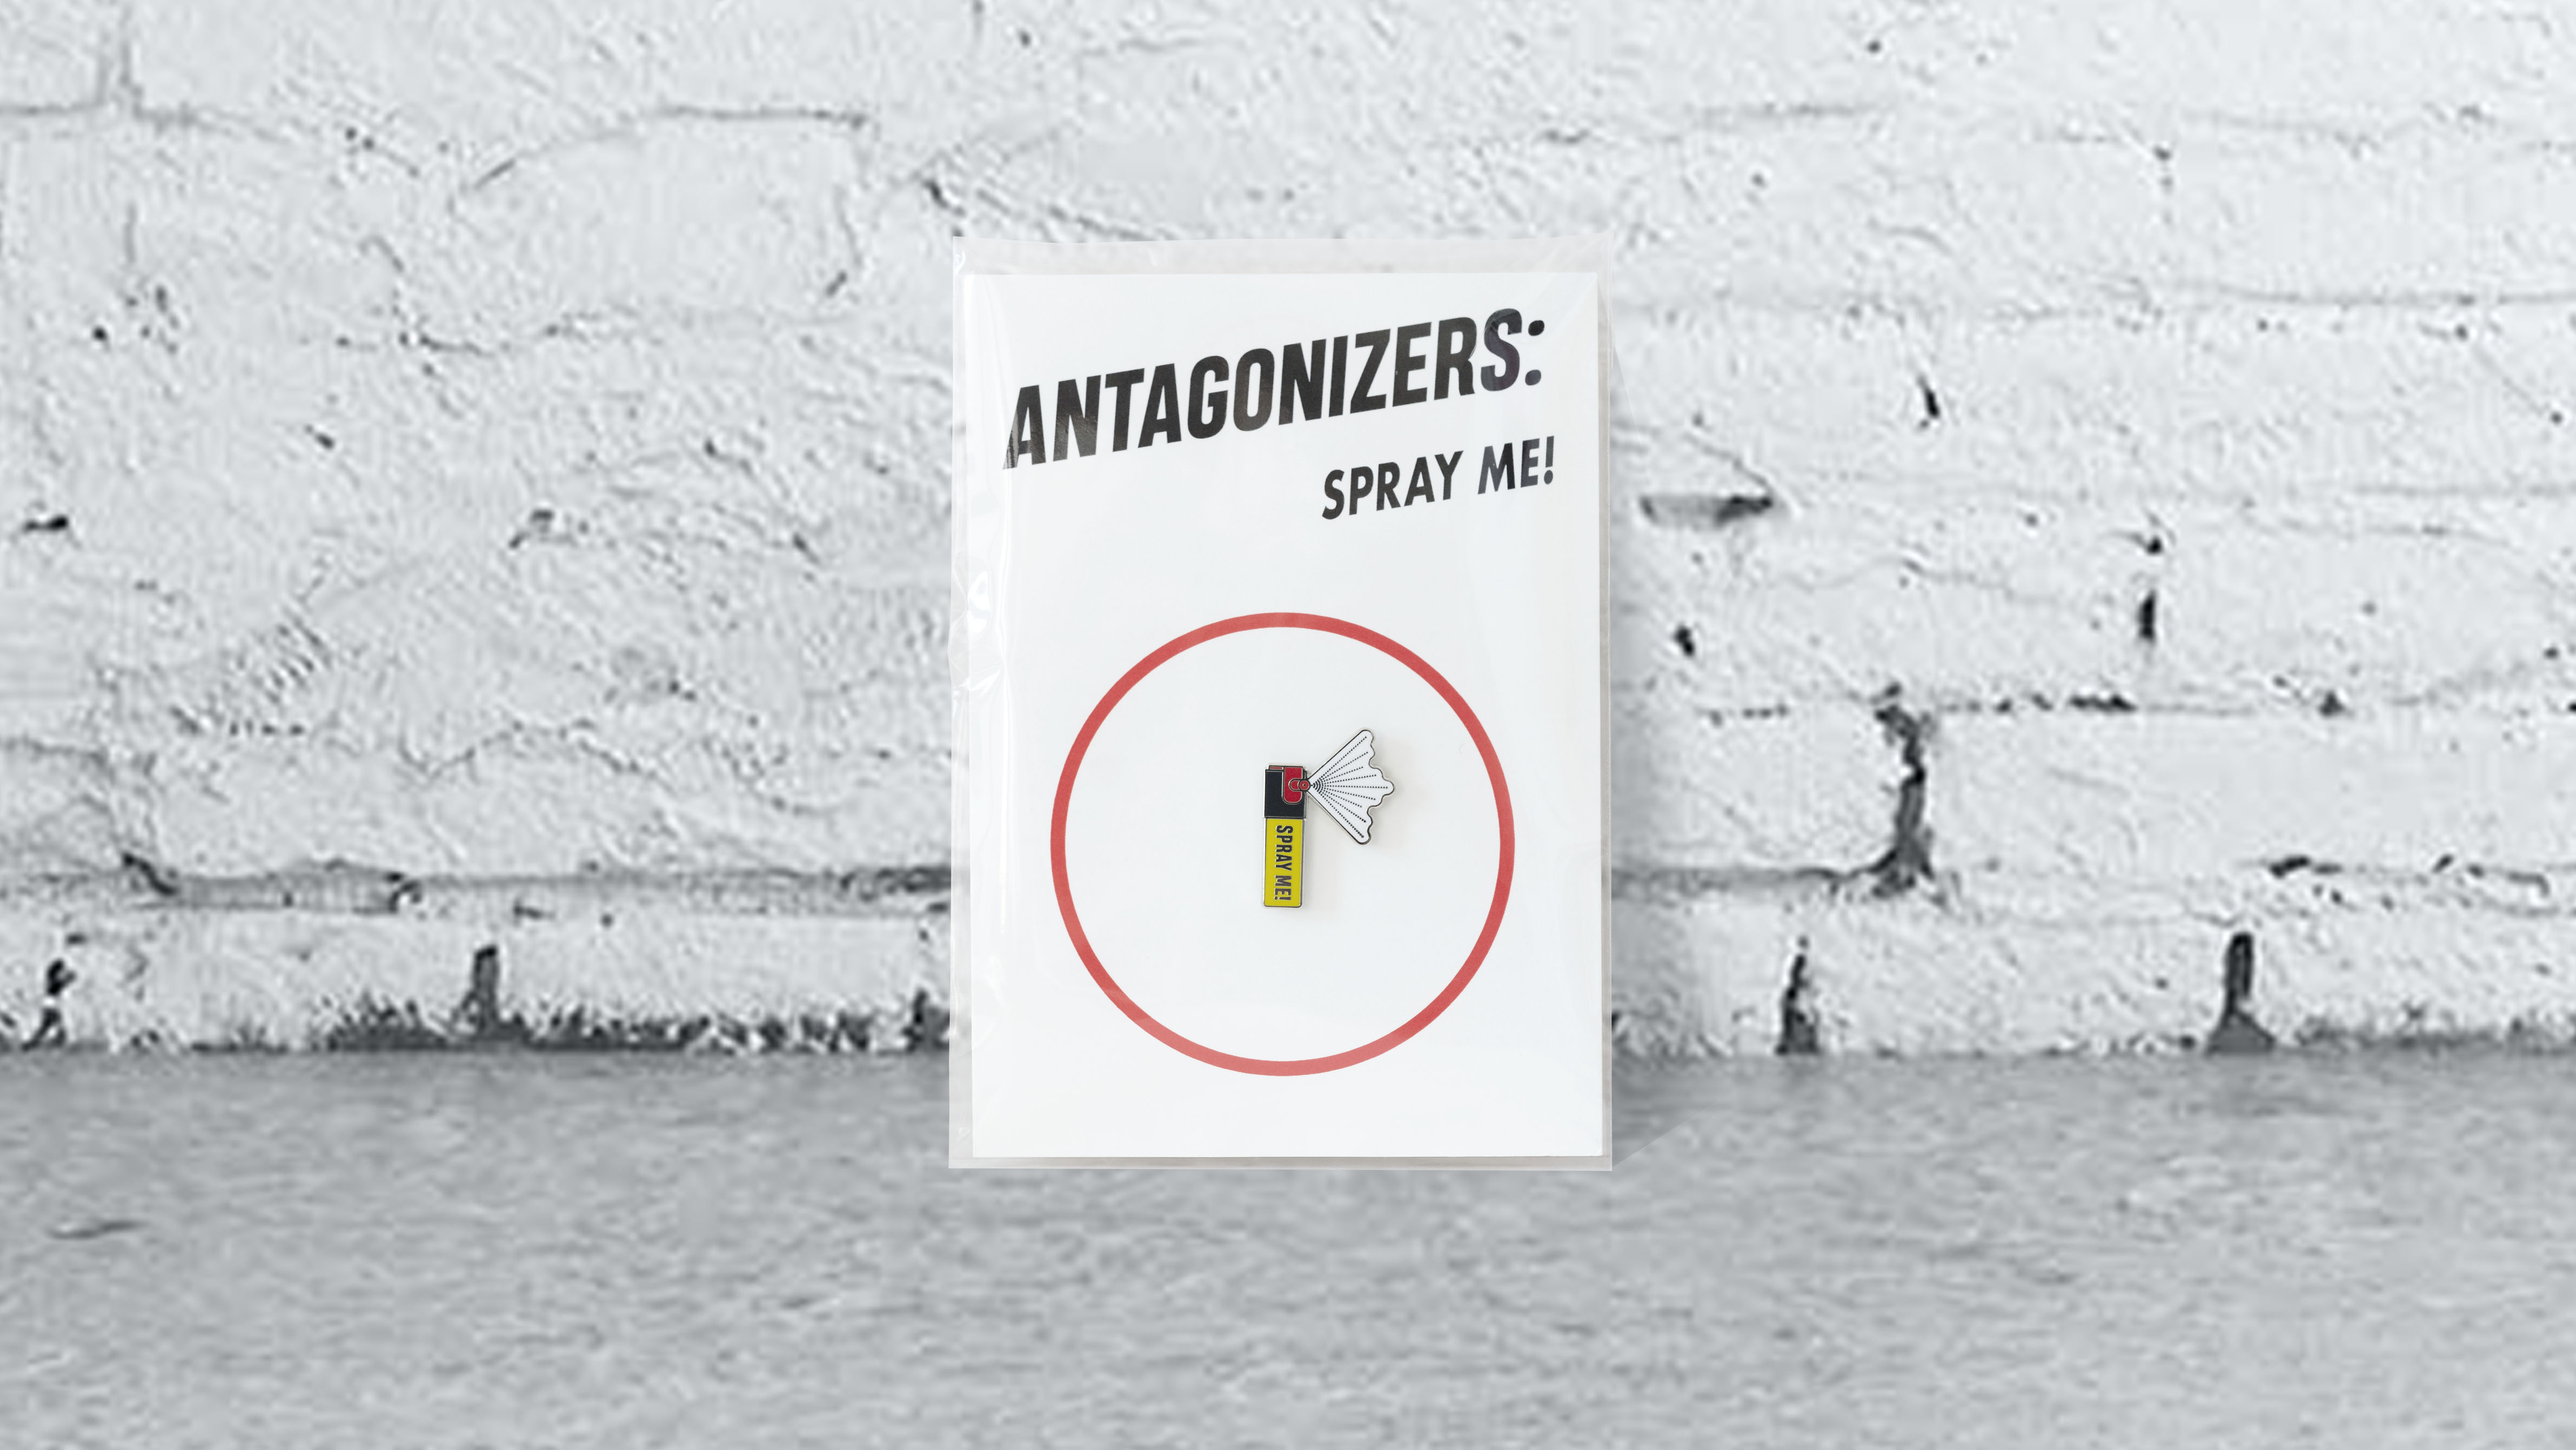 Antagonizers: Spray Me!